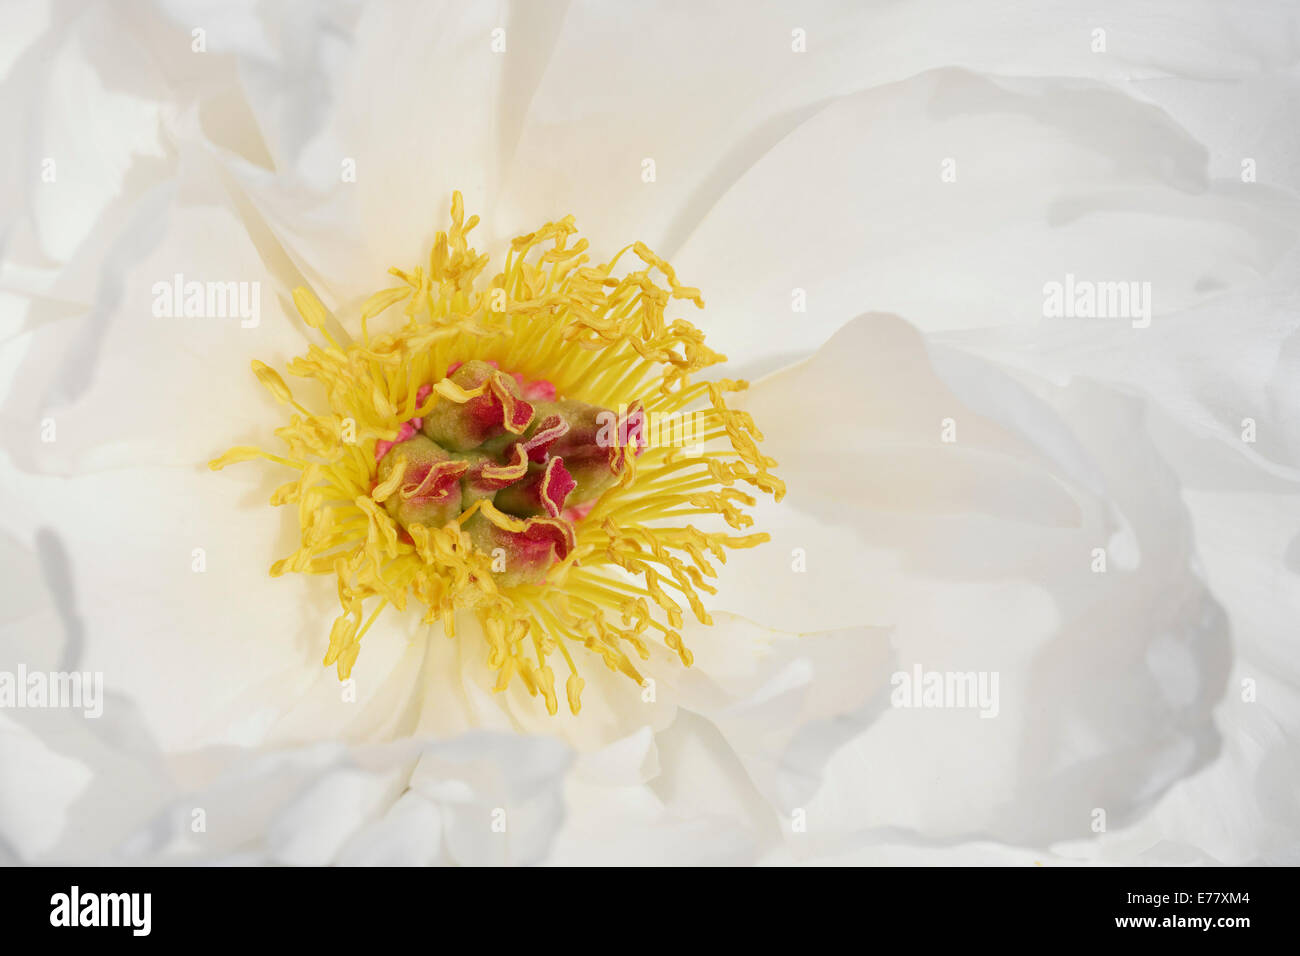 Stigma and germinating pollen, Chinese Peony (Paeonia lactiflora), 'Zu Zu' variety Stock Photo